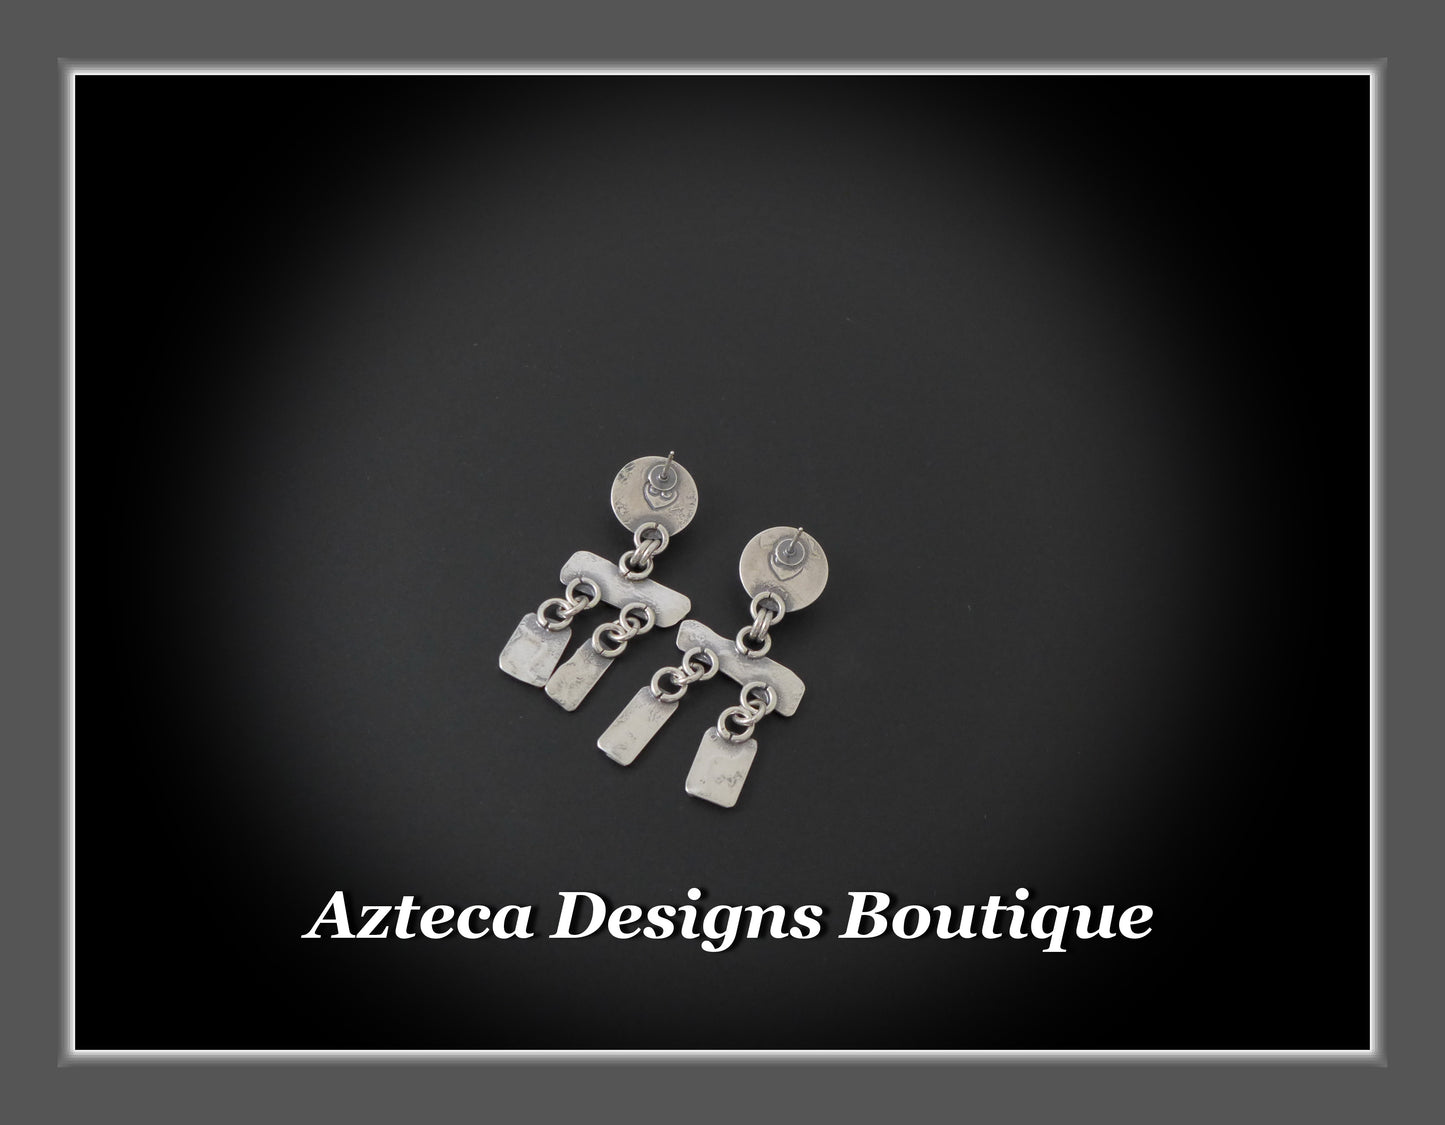 Desert Wind+Cultured Sterling Opal+Sterling Silver Hand Fabricated Post Earrings